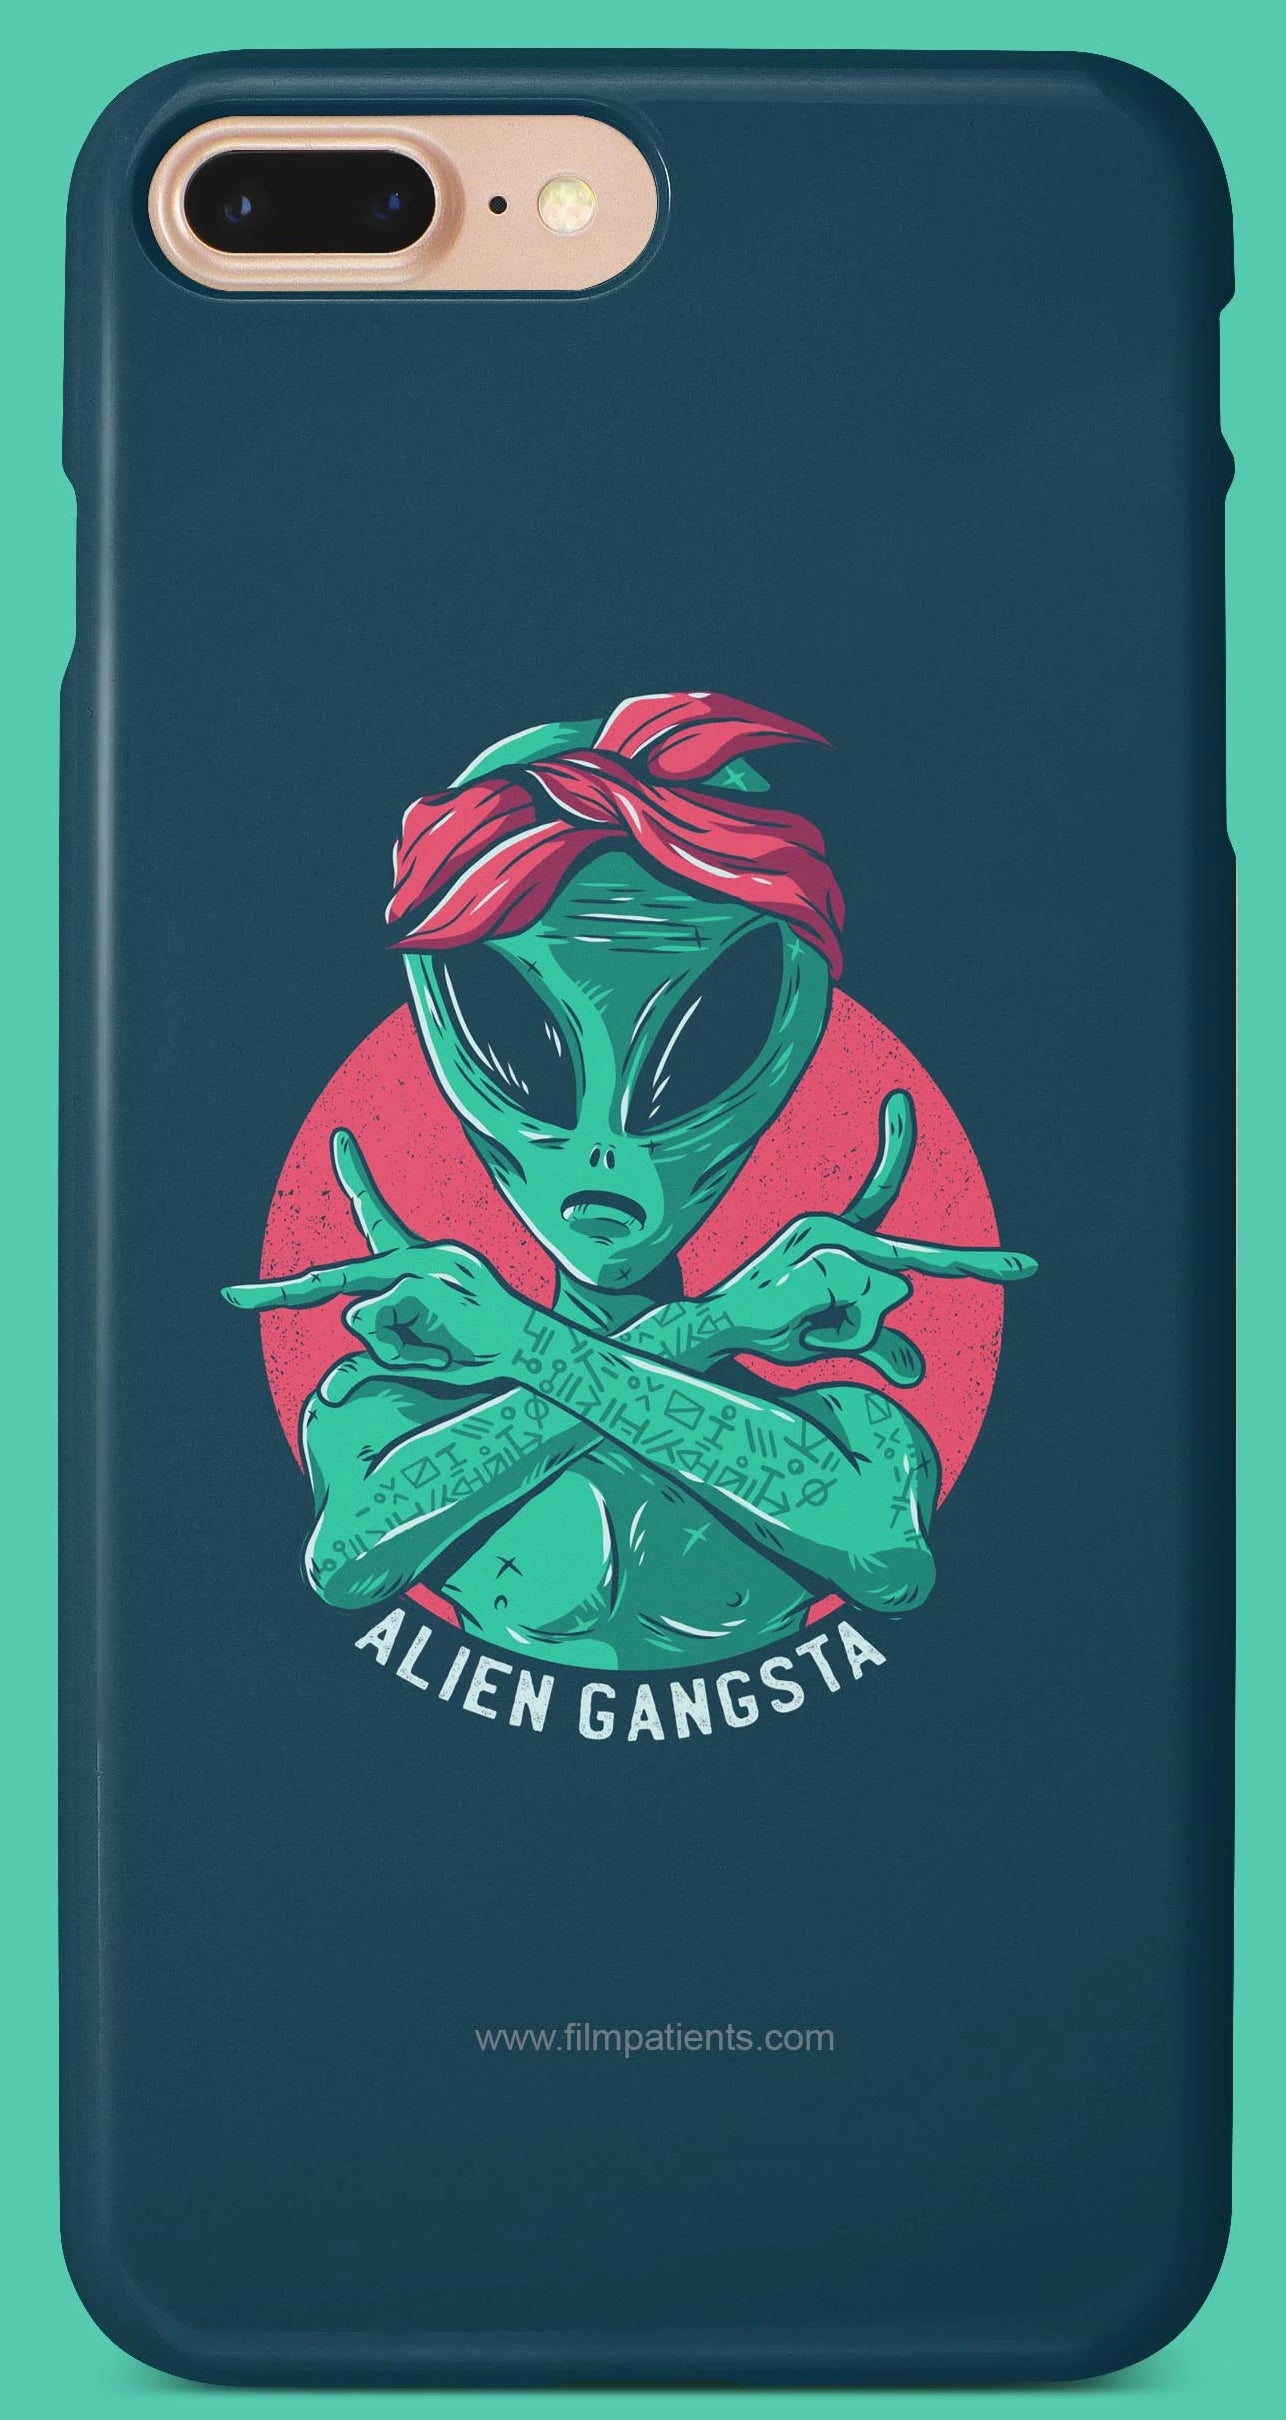 Alien Gangsta Mobile Cover | Film Patients